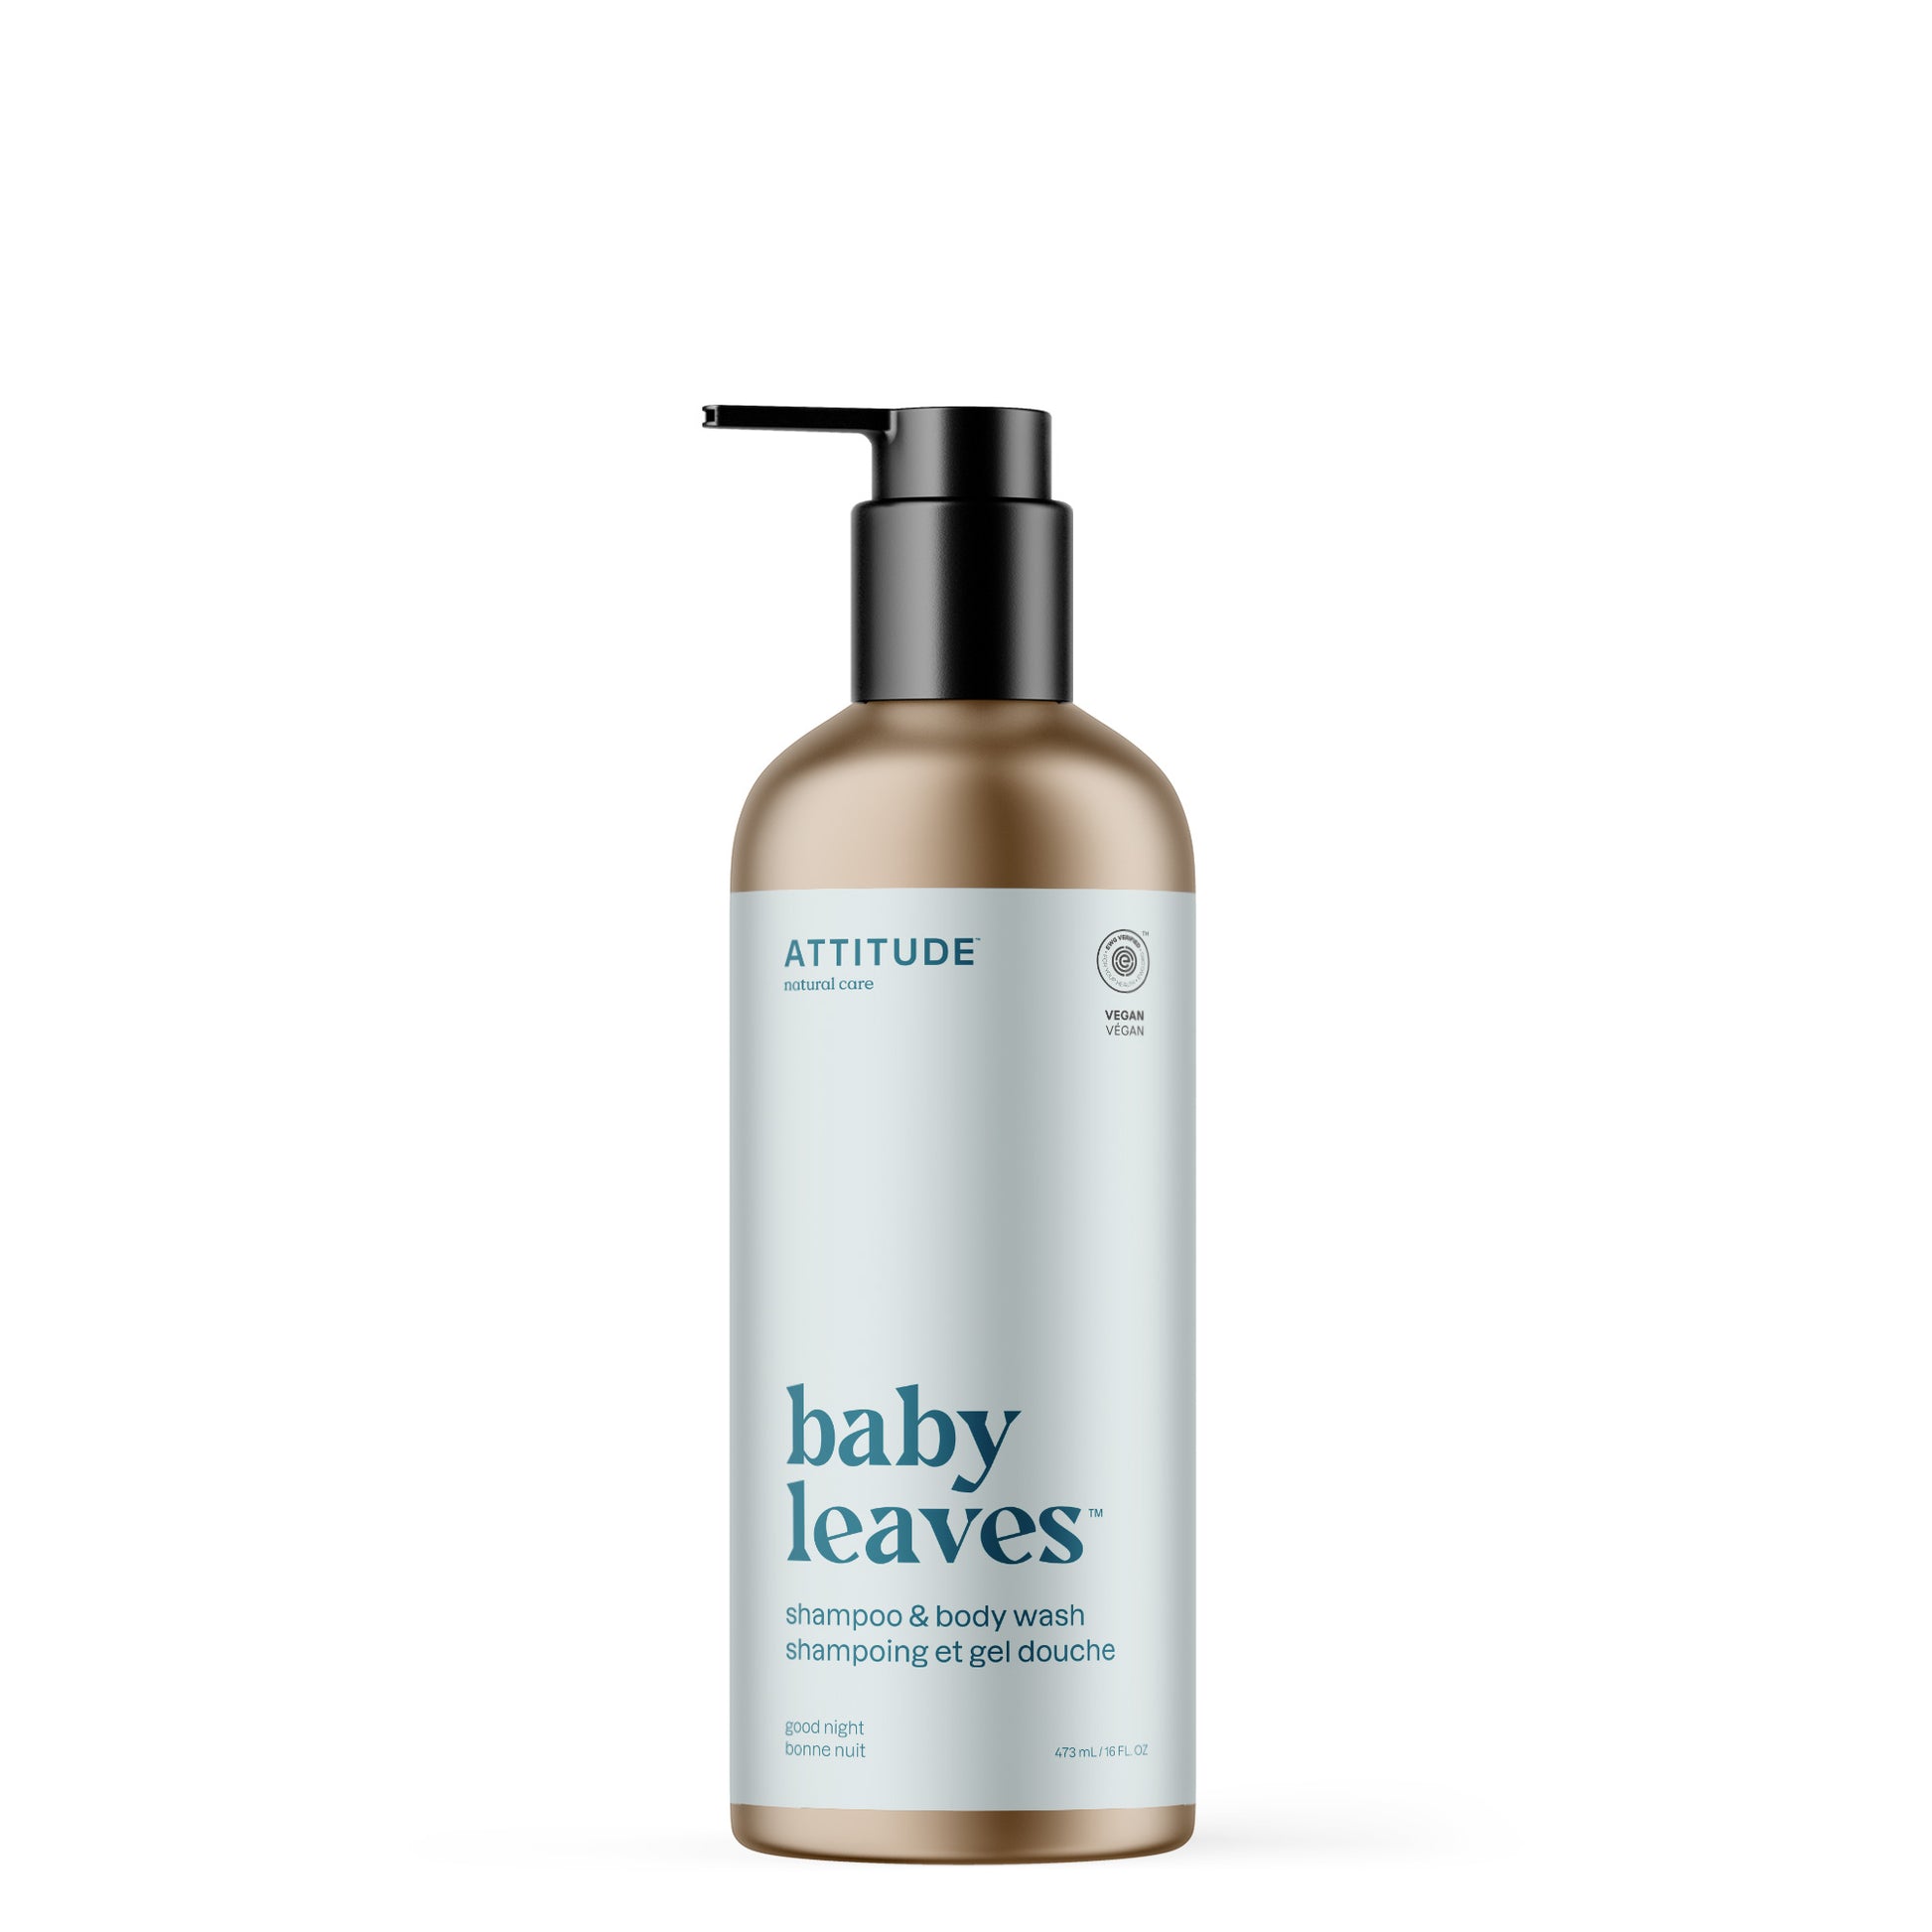 ATTITUDE Baby Leaves Aluminum shampoo body wash Good Night 19613_en?_main? 473mL